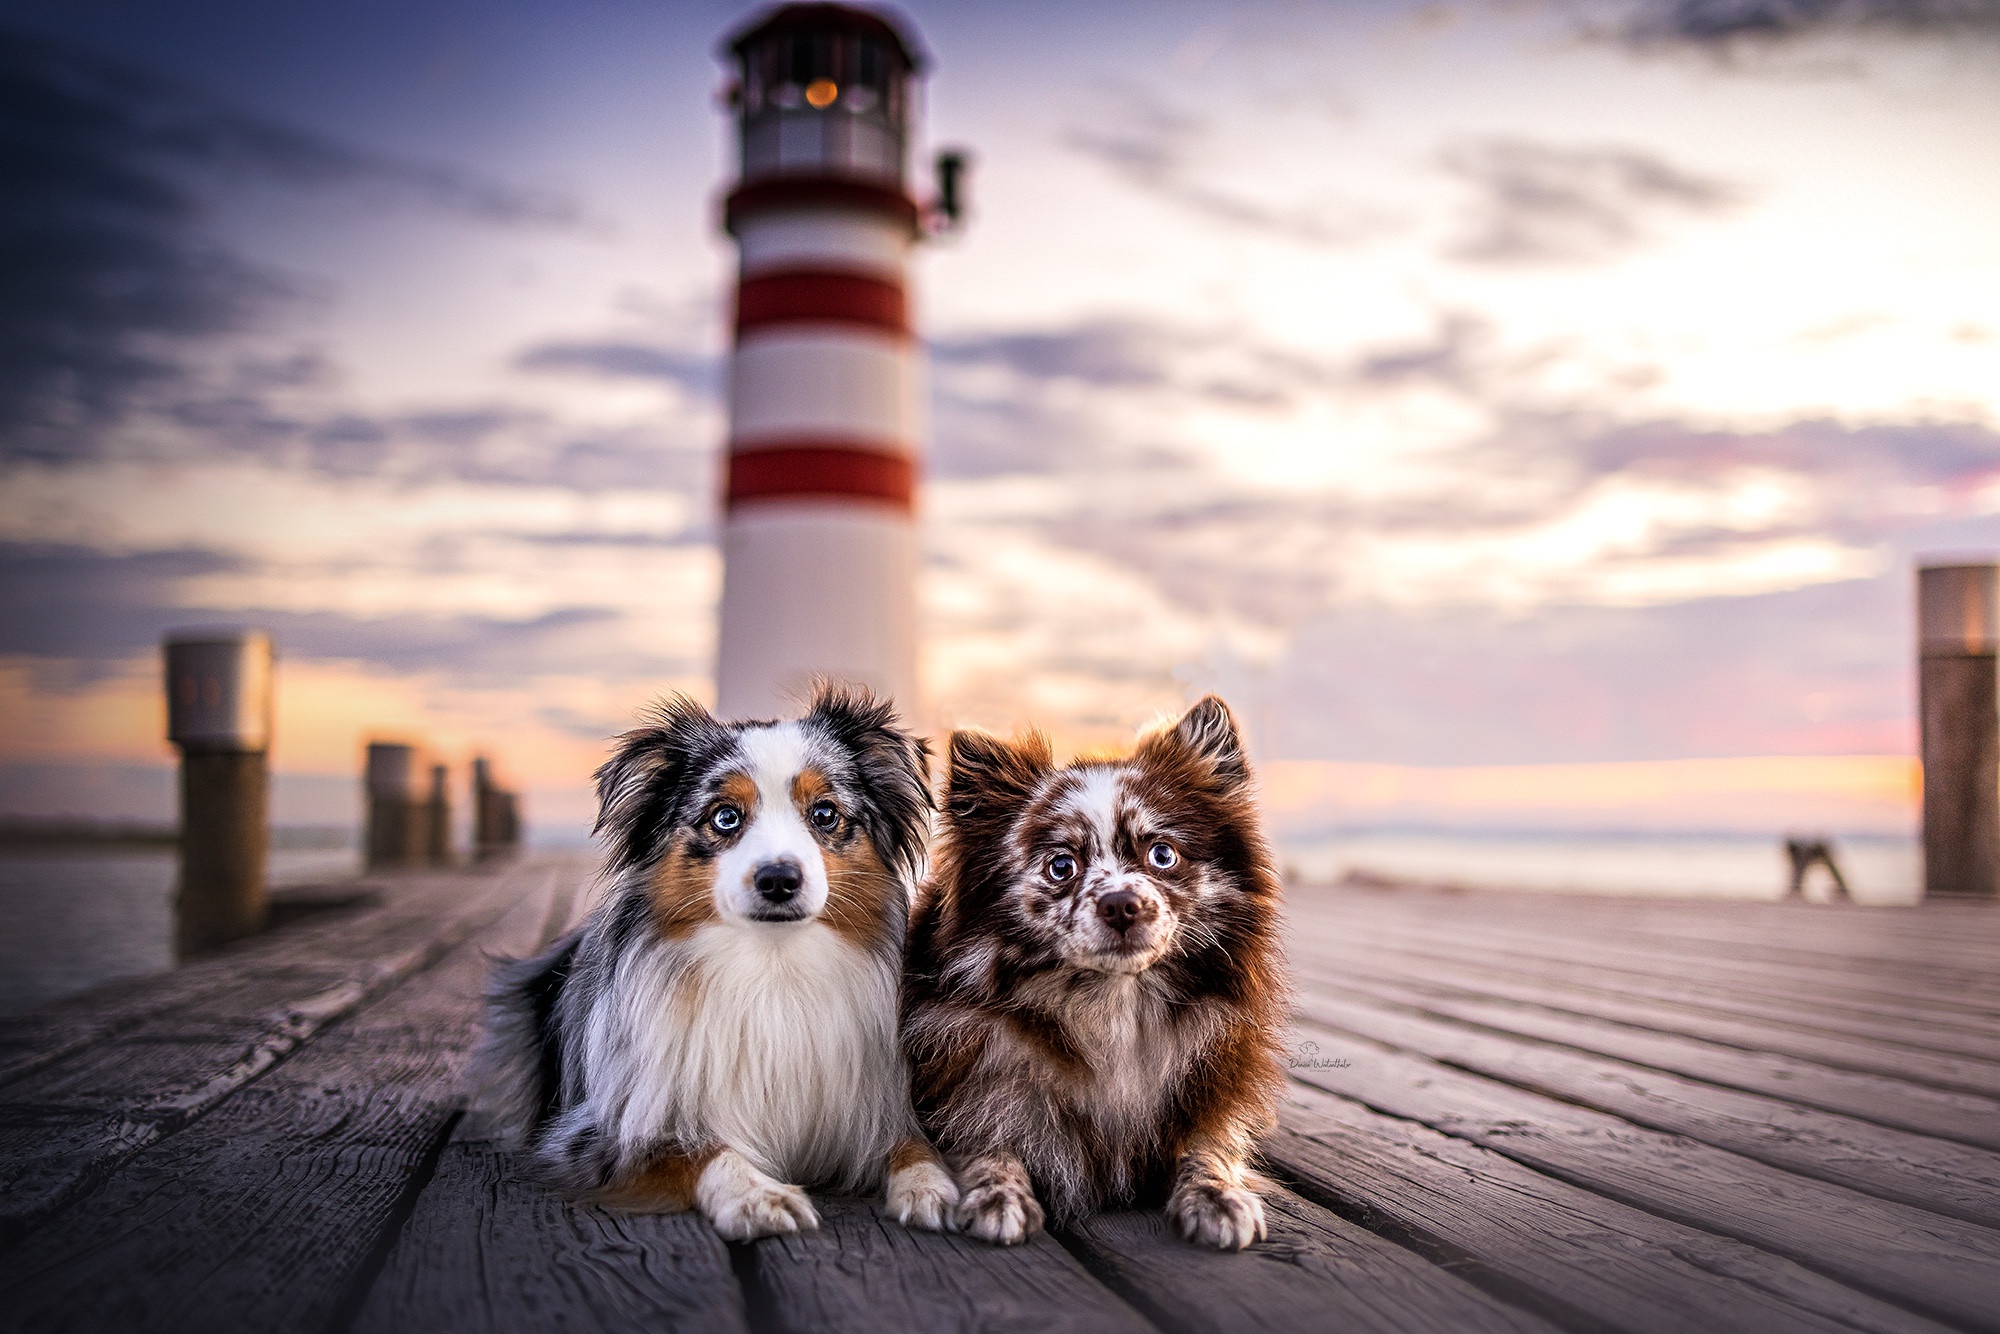 General 2000x1334 dog outdoors pier lighthouse animals mammals